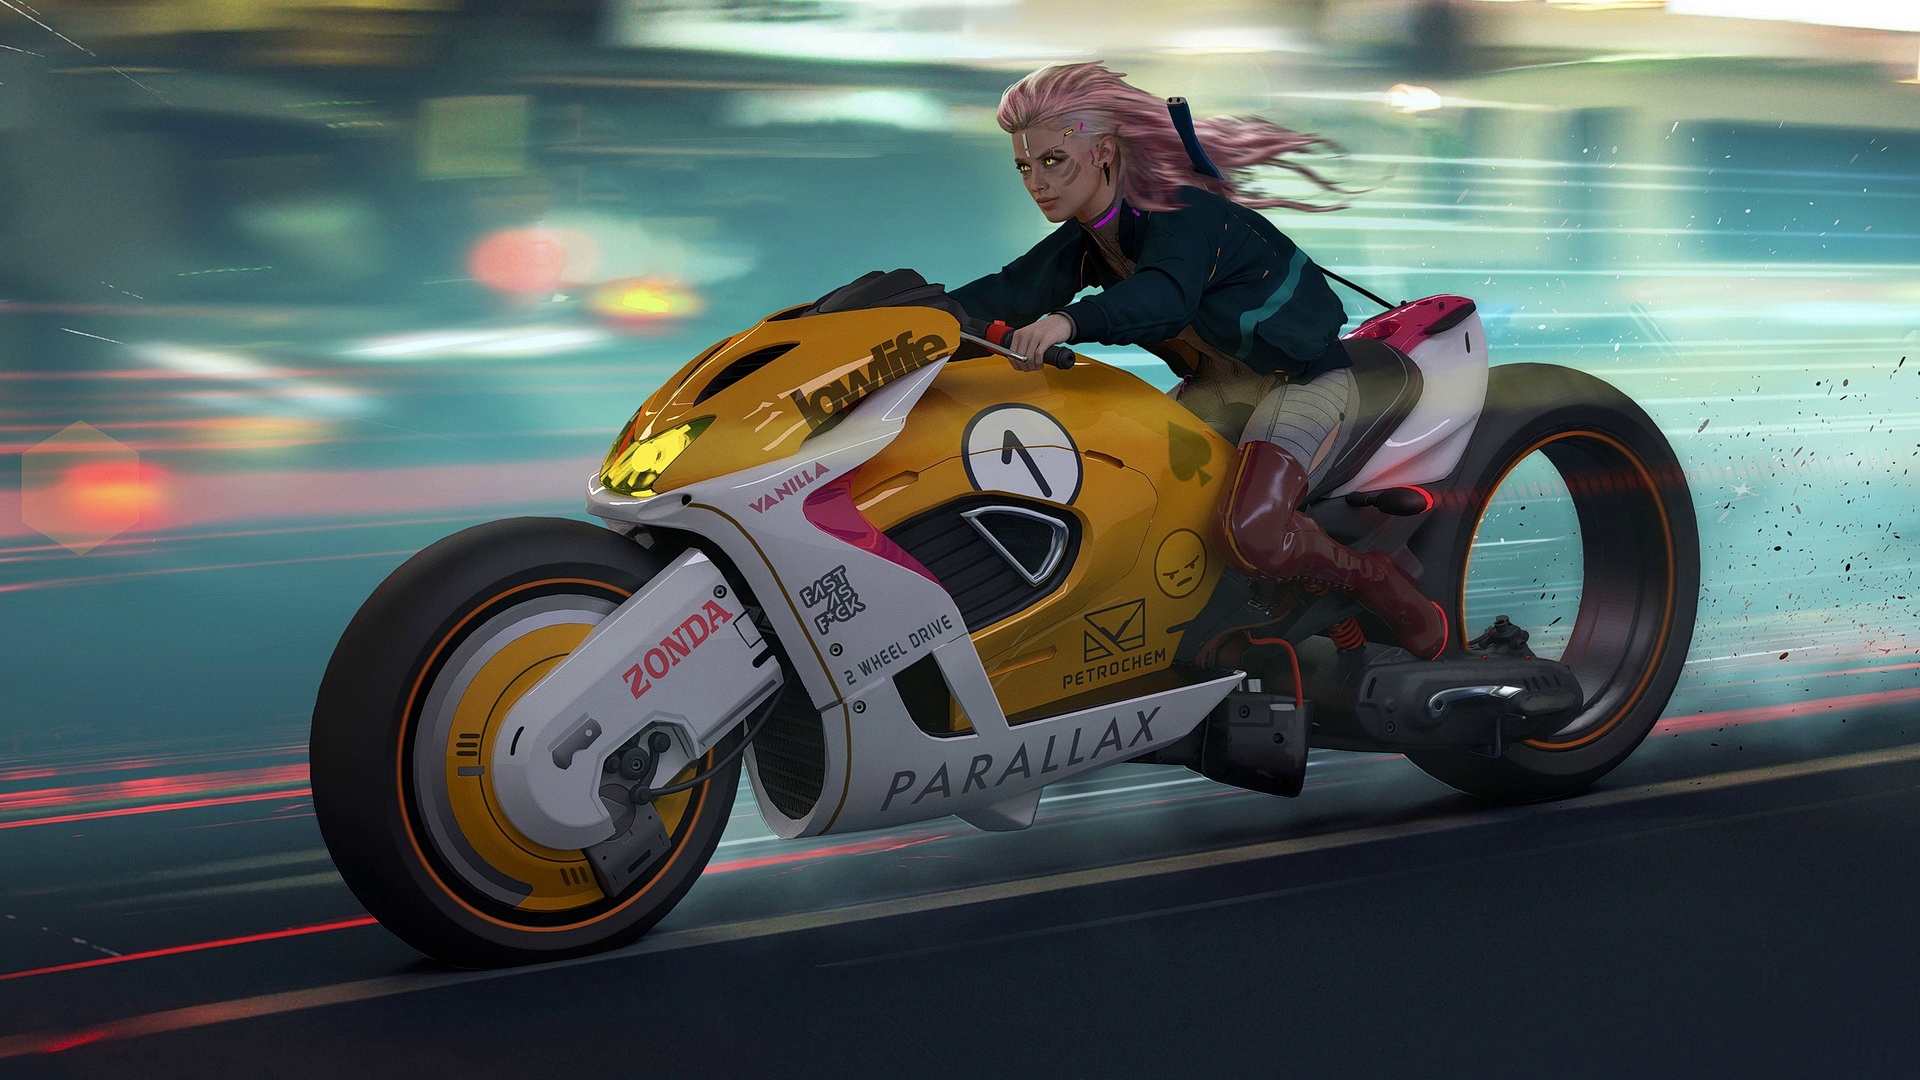 Бесплатное фото Девушка едет на фантастическом мотоцикле